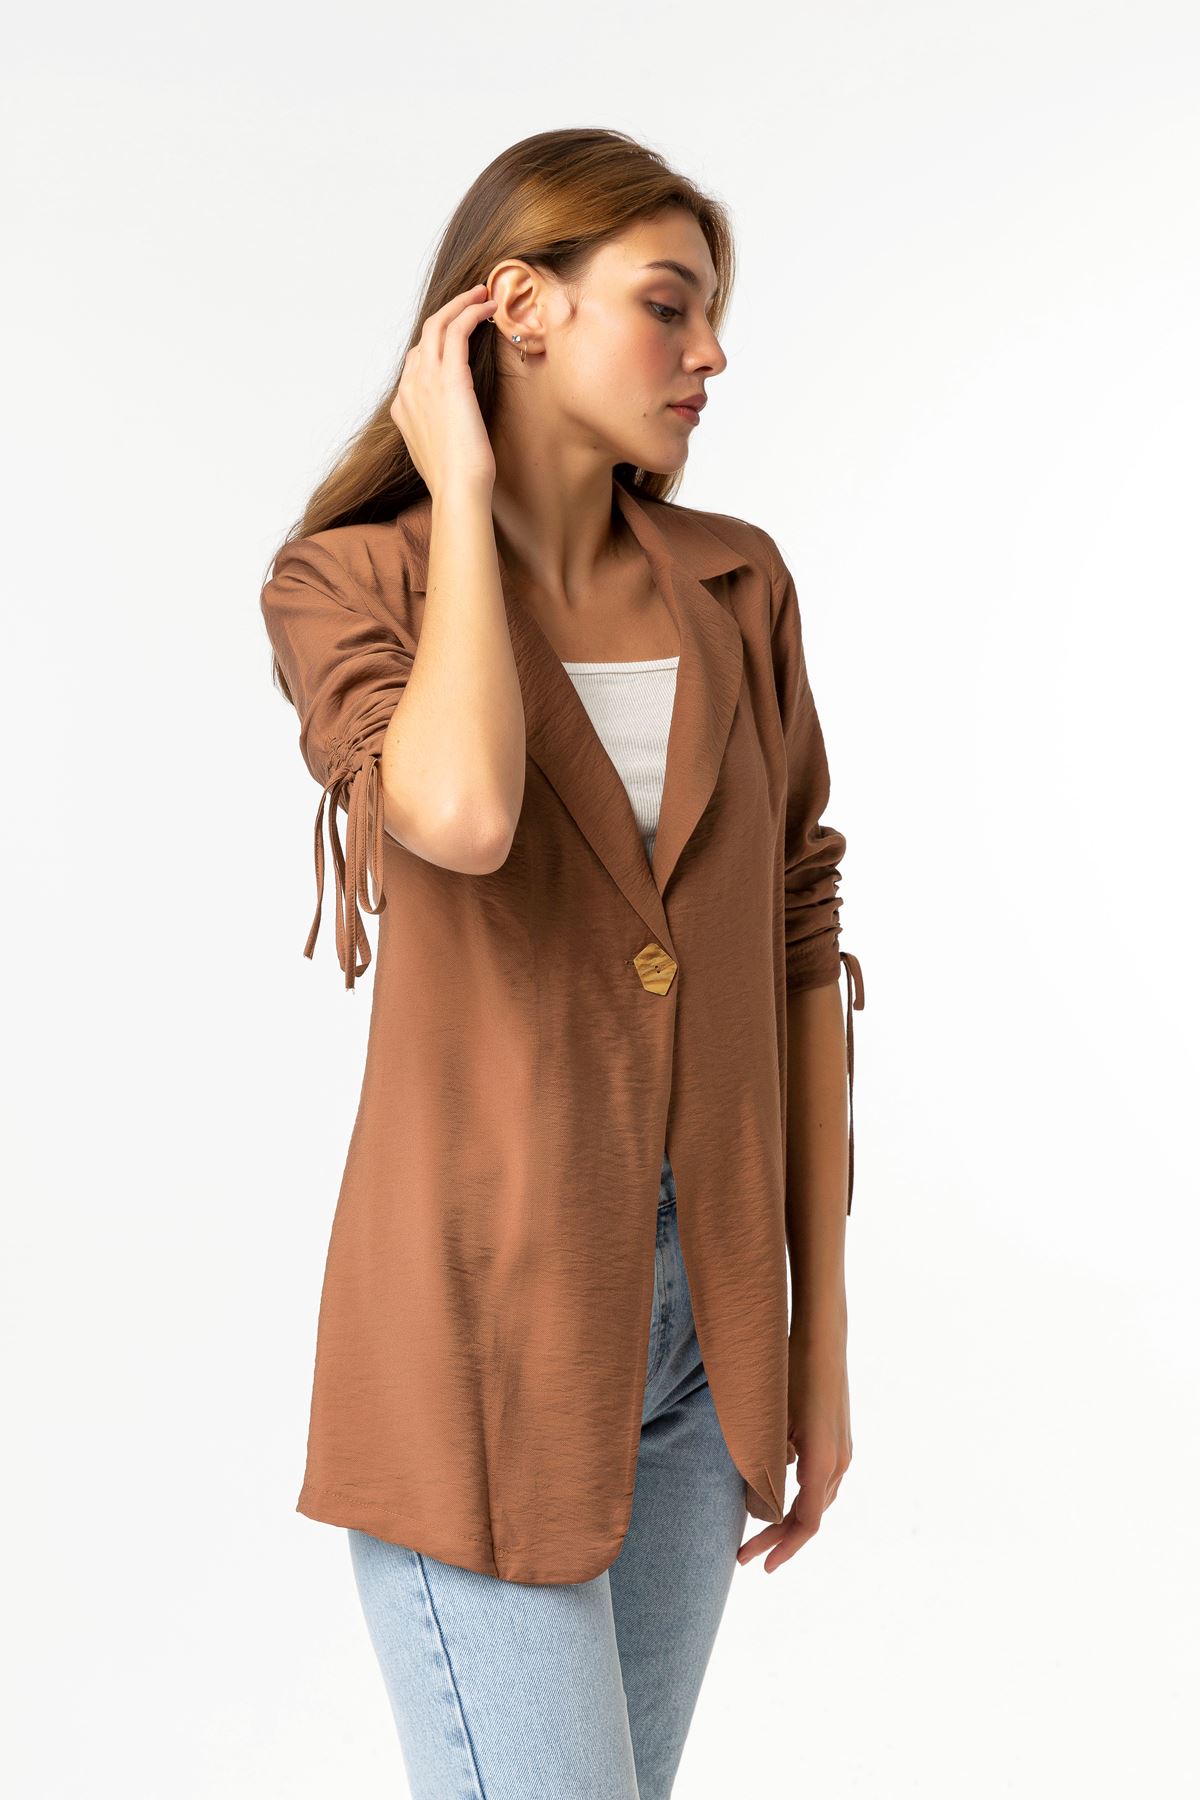 Aerobin Fabric Revere Collar Hip Height Comfy Women Jacket - Brown